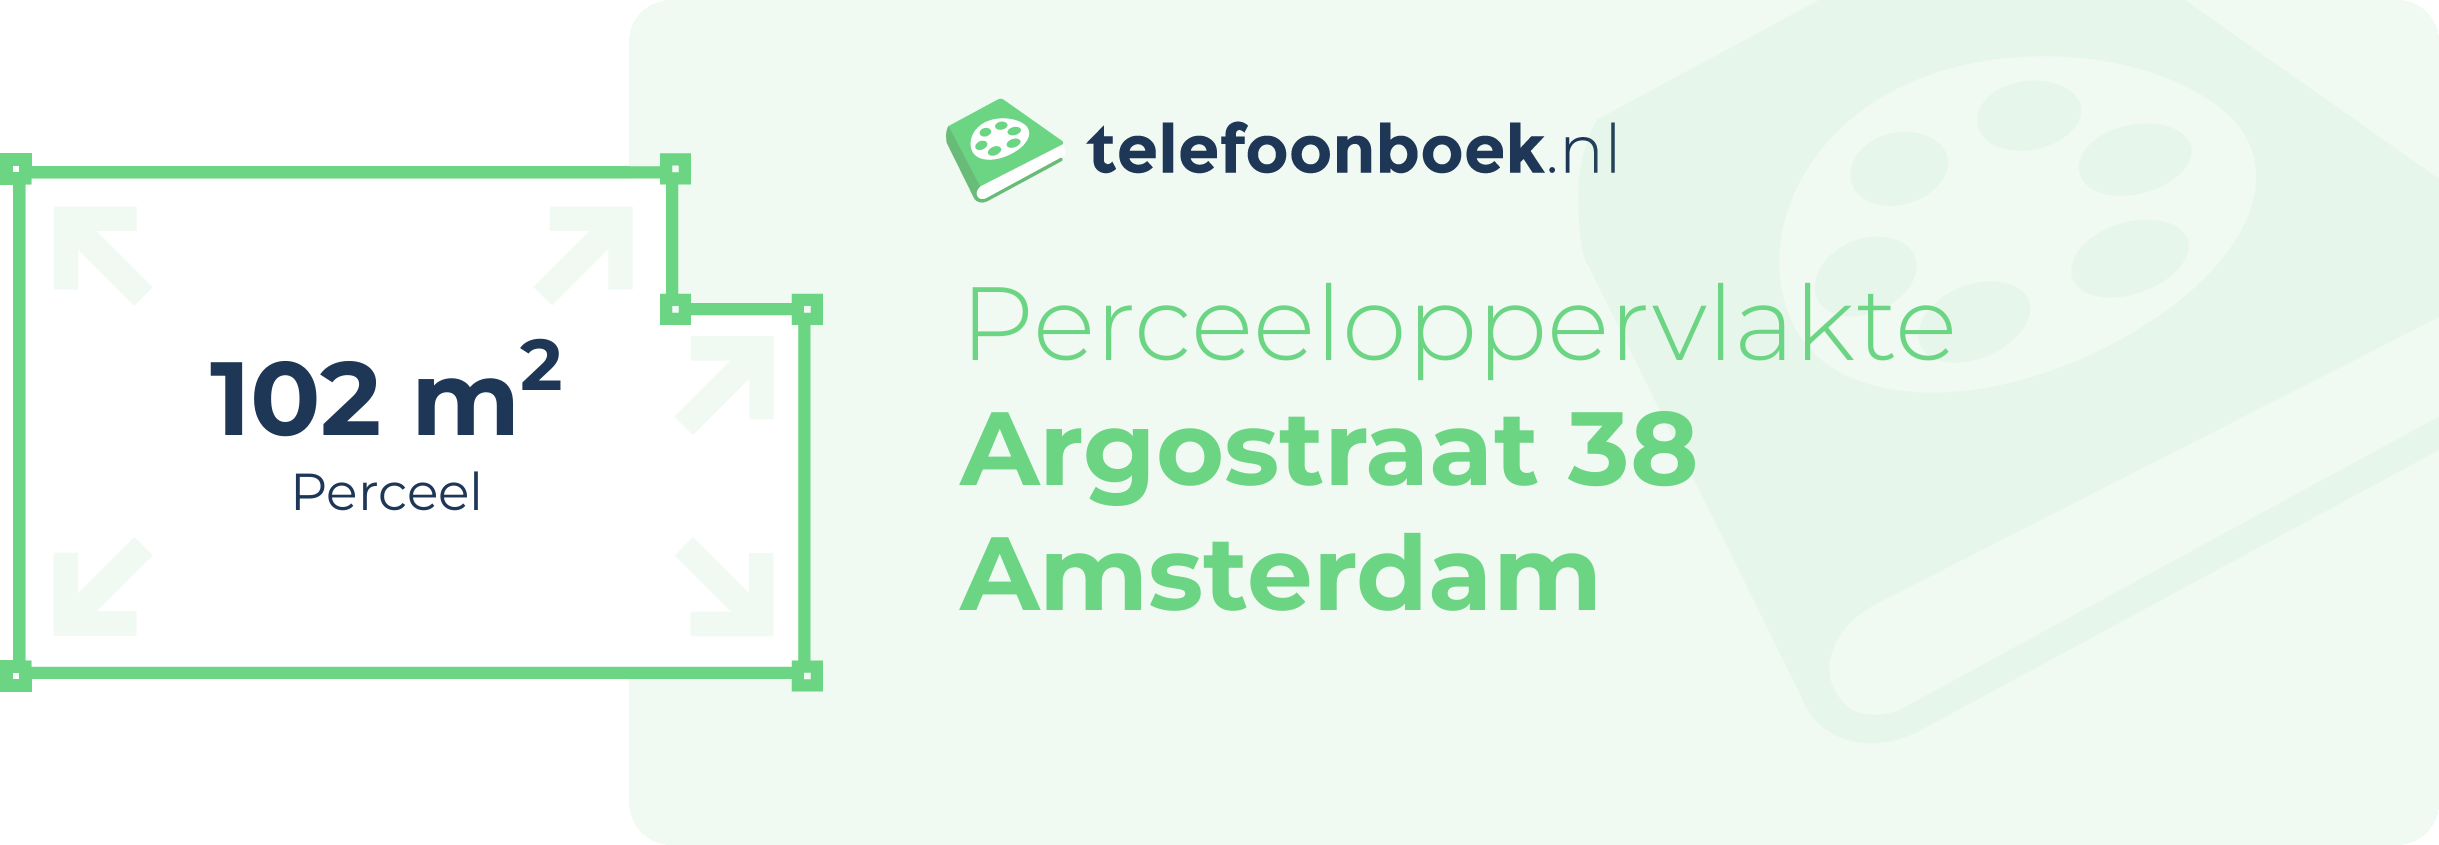 Perceeloppervlakte Argostraat 38 Amsterdam